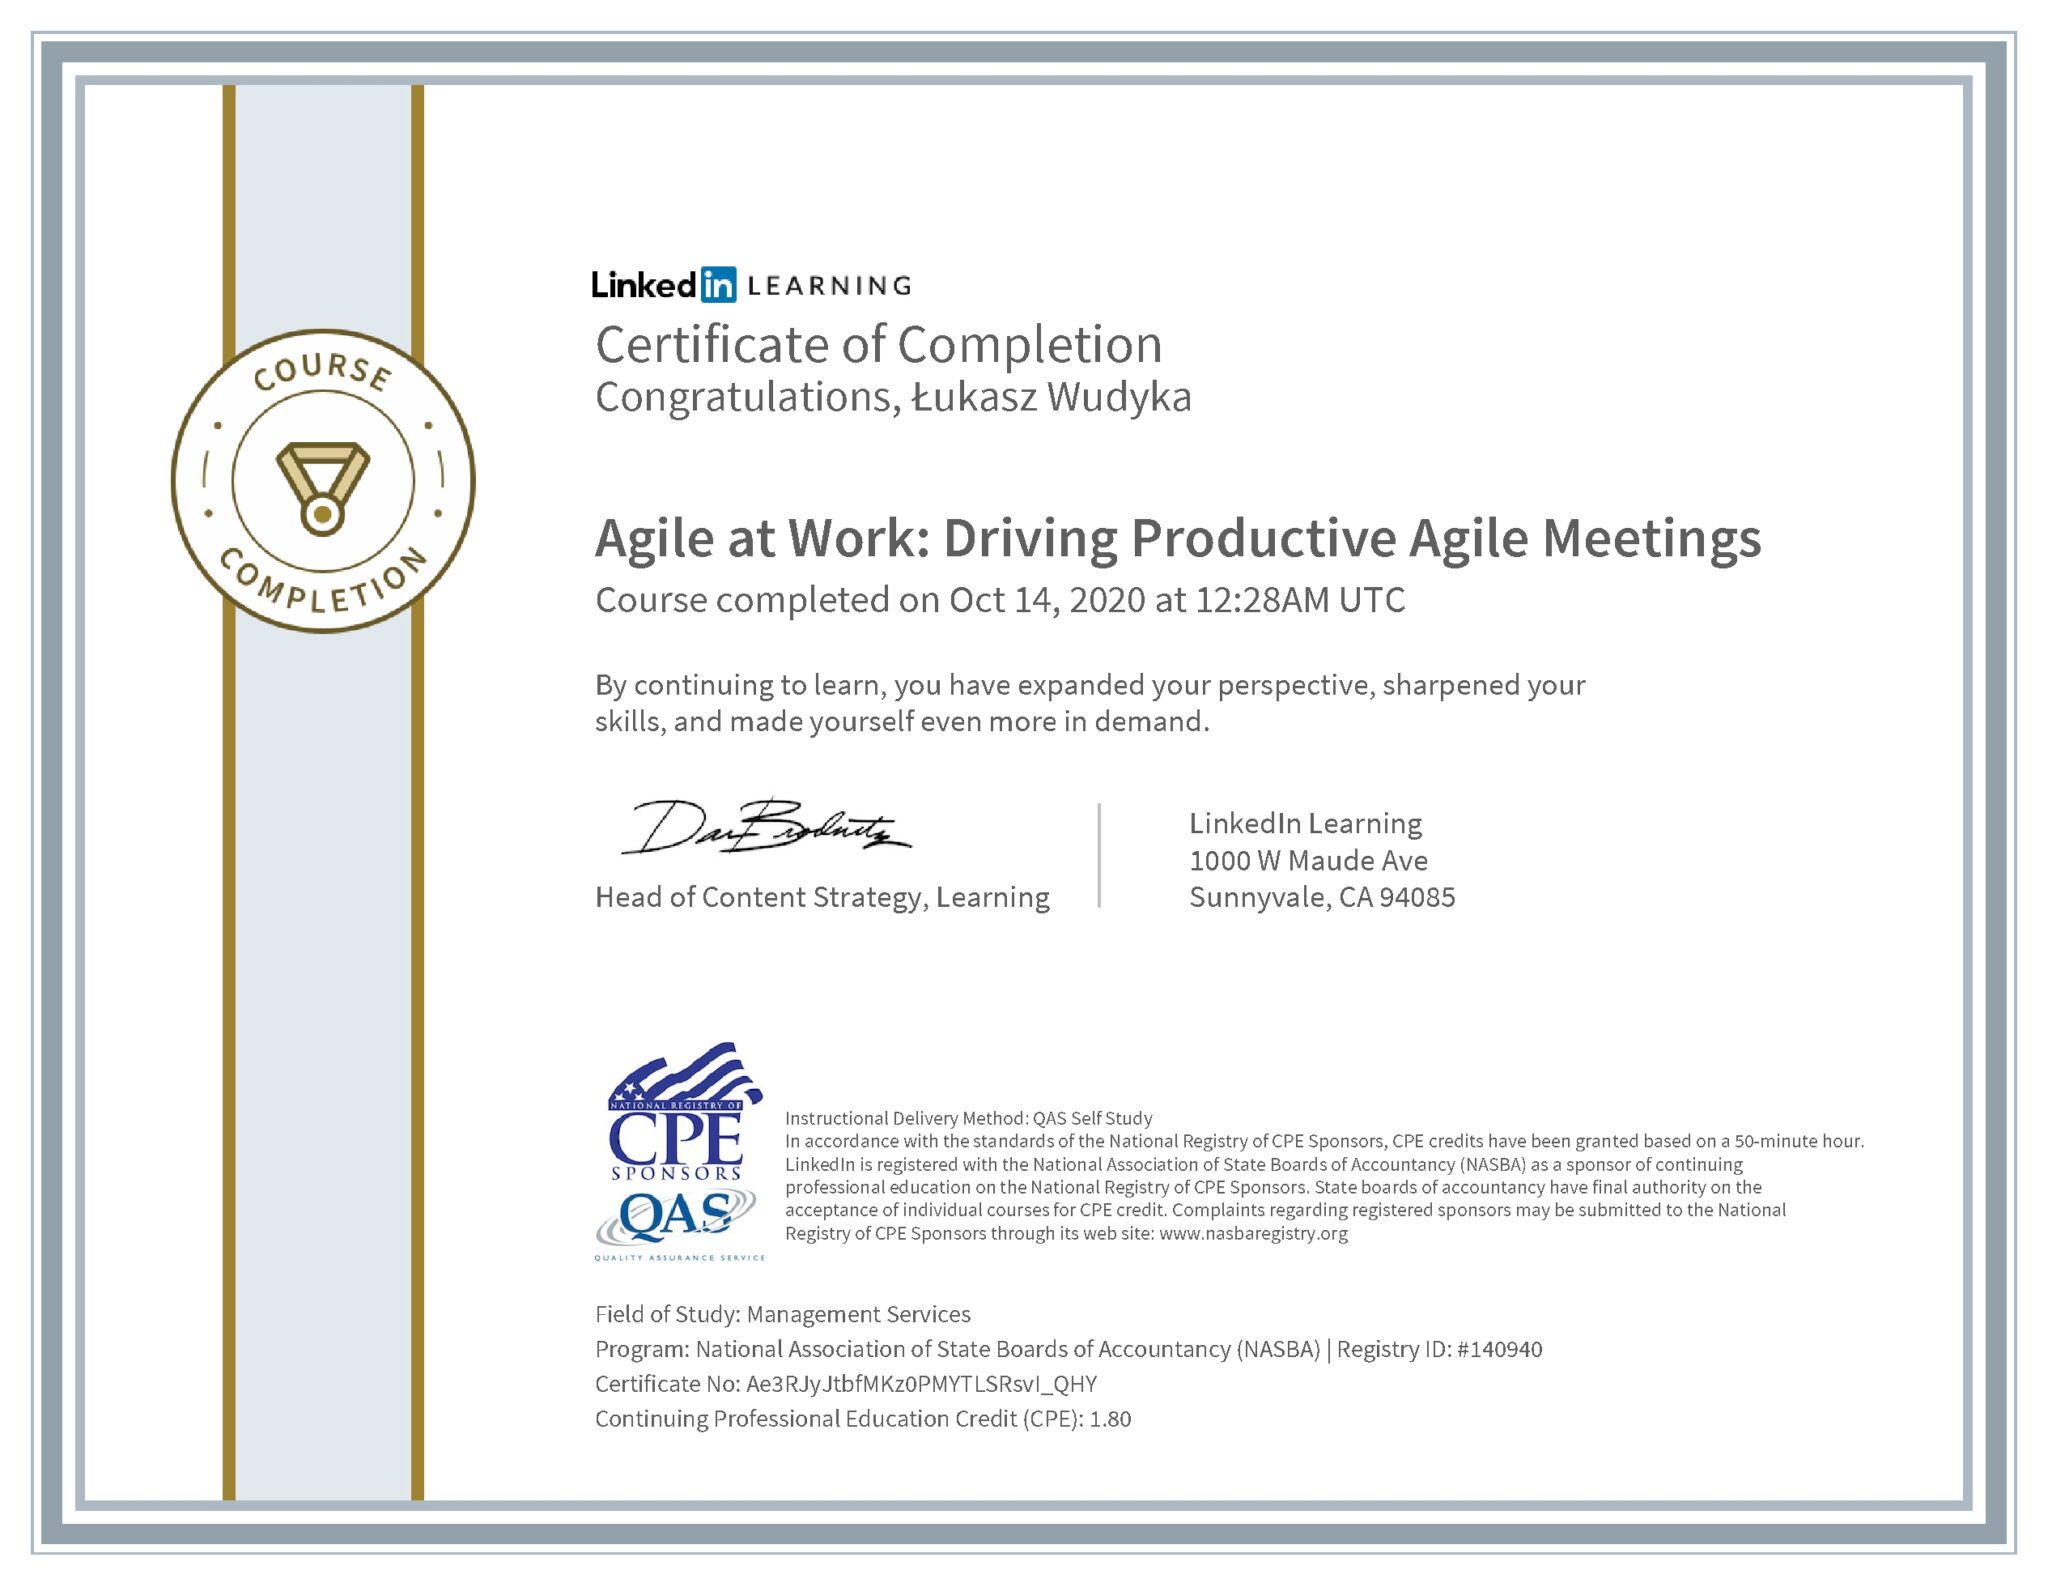 Łukasz Wudyka certyfikat LinkedIn Agile at Work: Driving Productive Agile Meetings NASBA